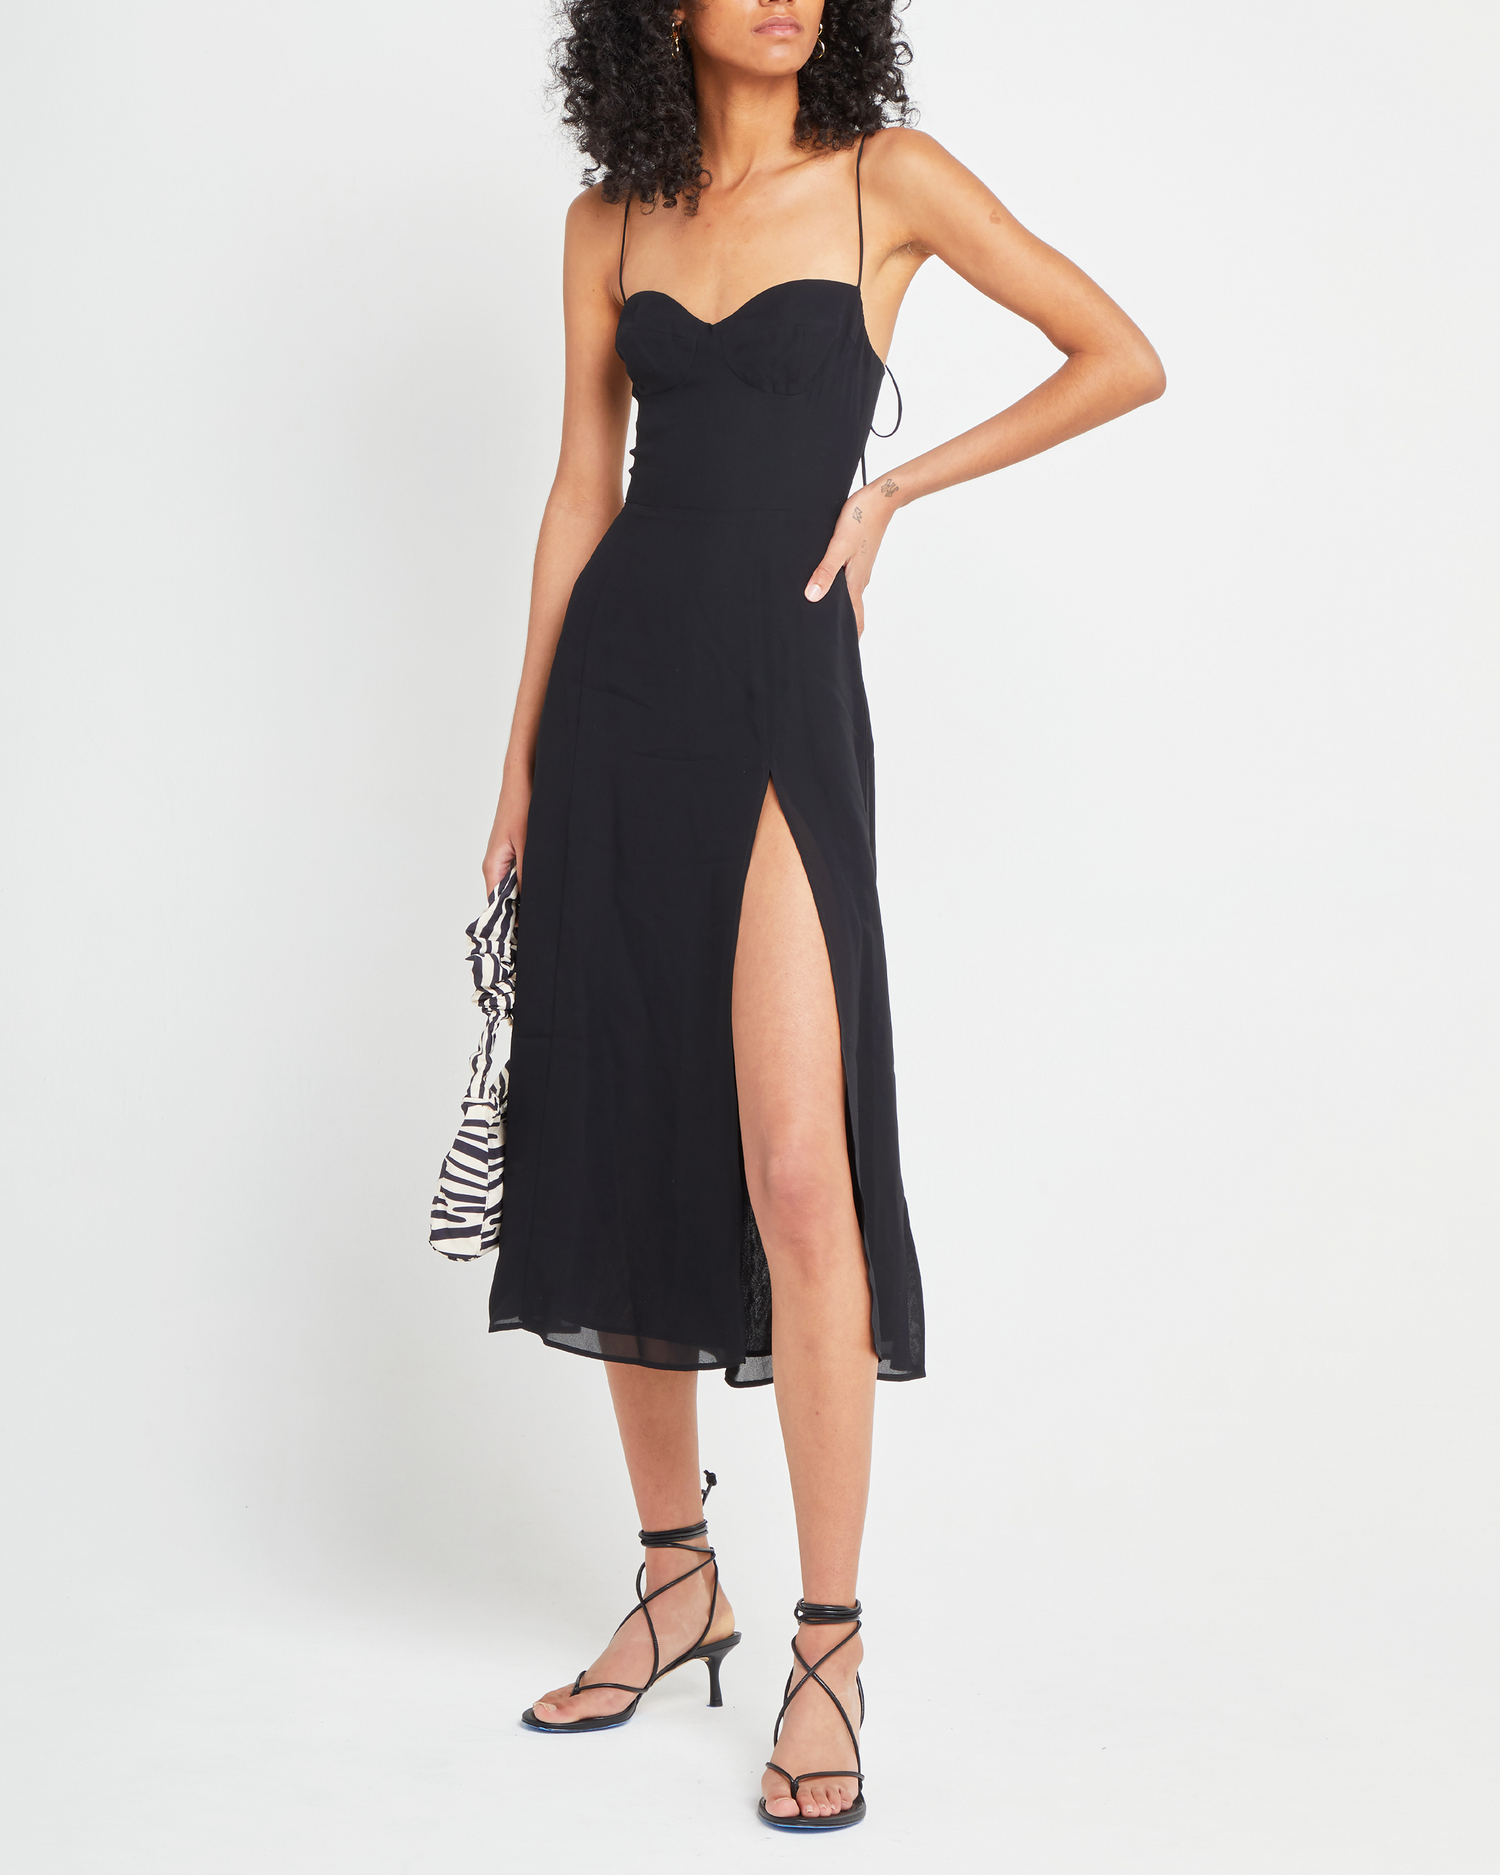 Third image of Venus Dress, a black midi dress, tie straps, spaghetti straps, side slit, bodice